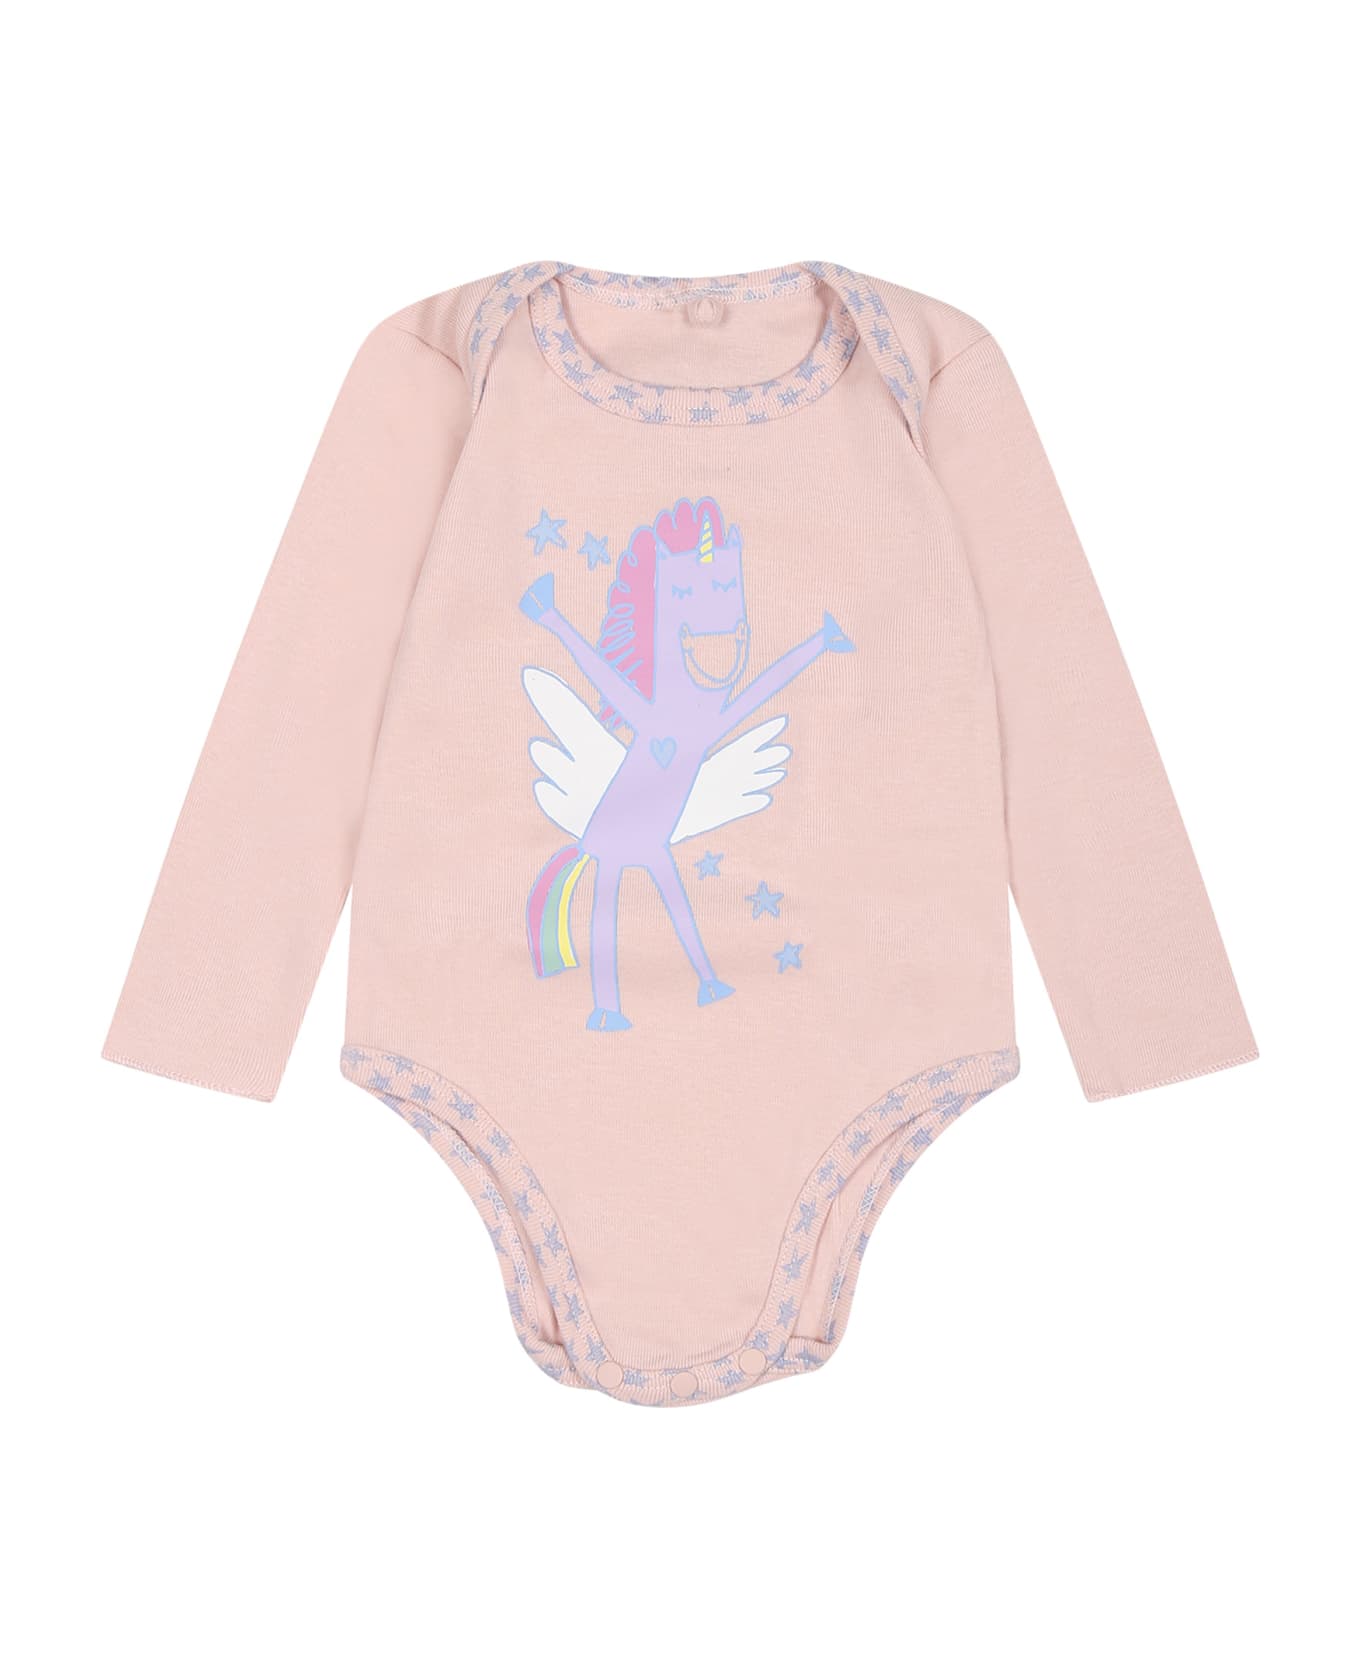 Stella McCartney Kids Pink Set For Baby Girl With Unicorn - Pink